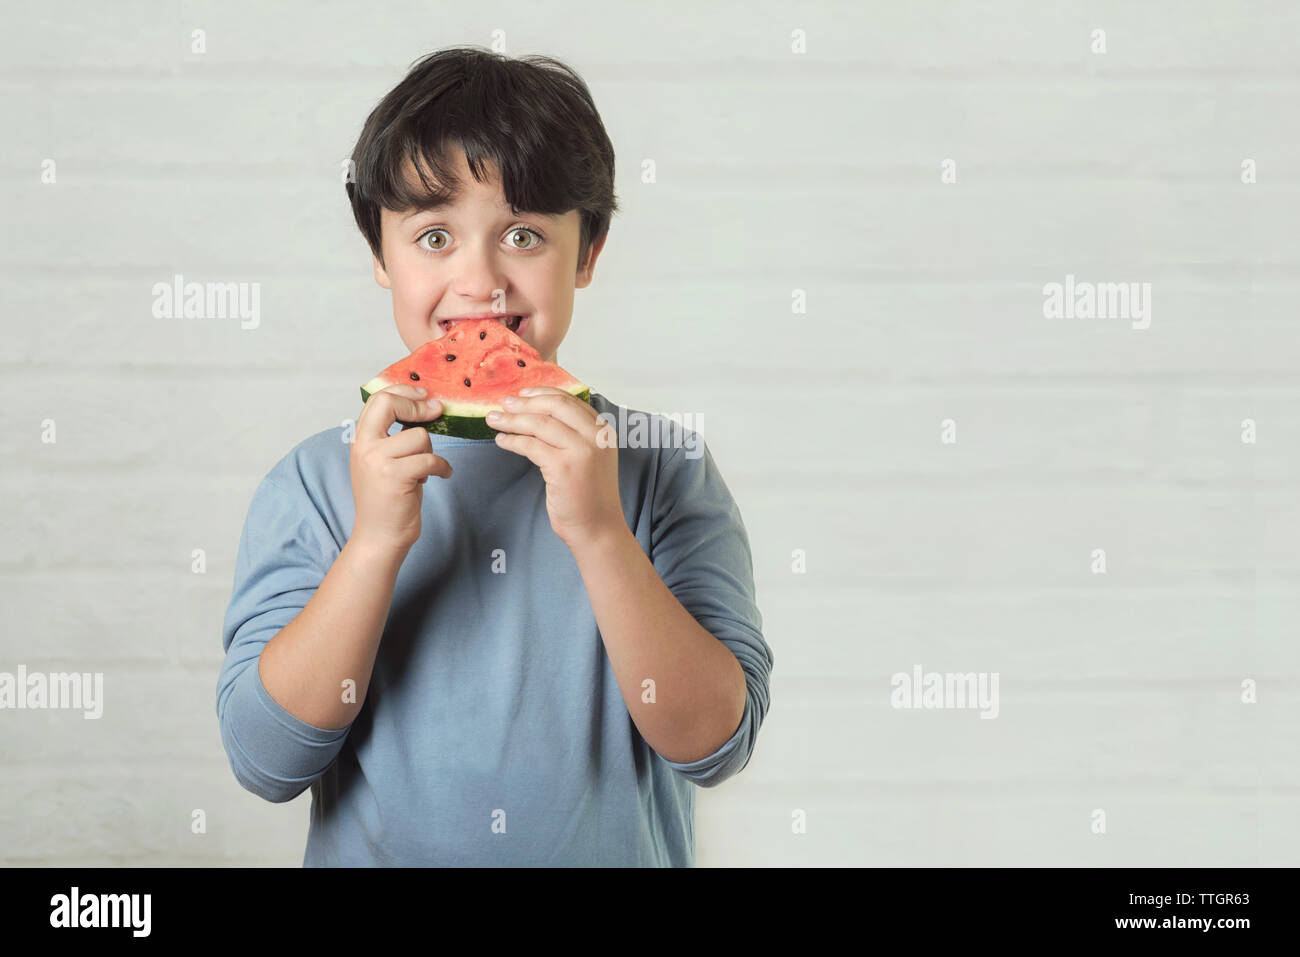 happy child eating watermelon on brick background Stock Photo